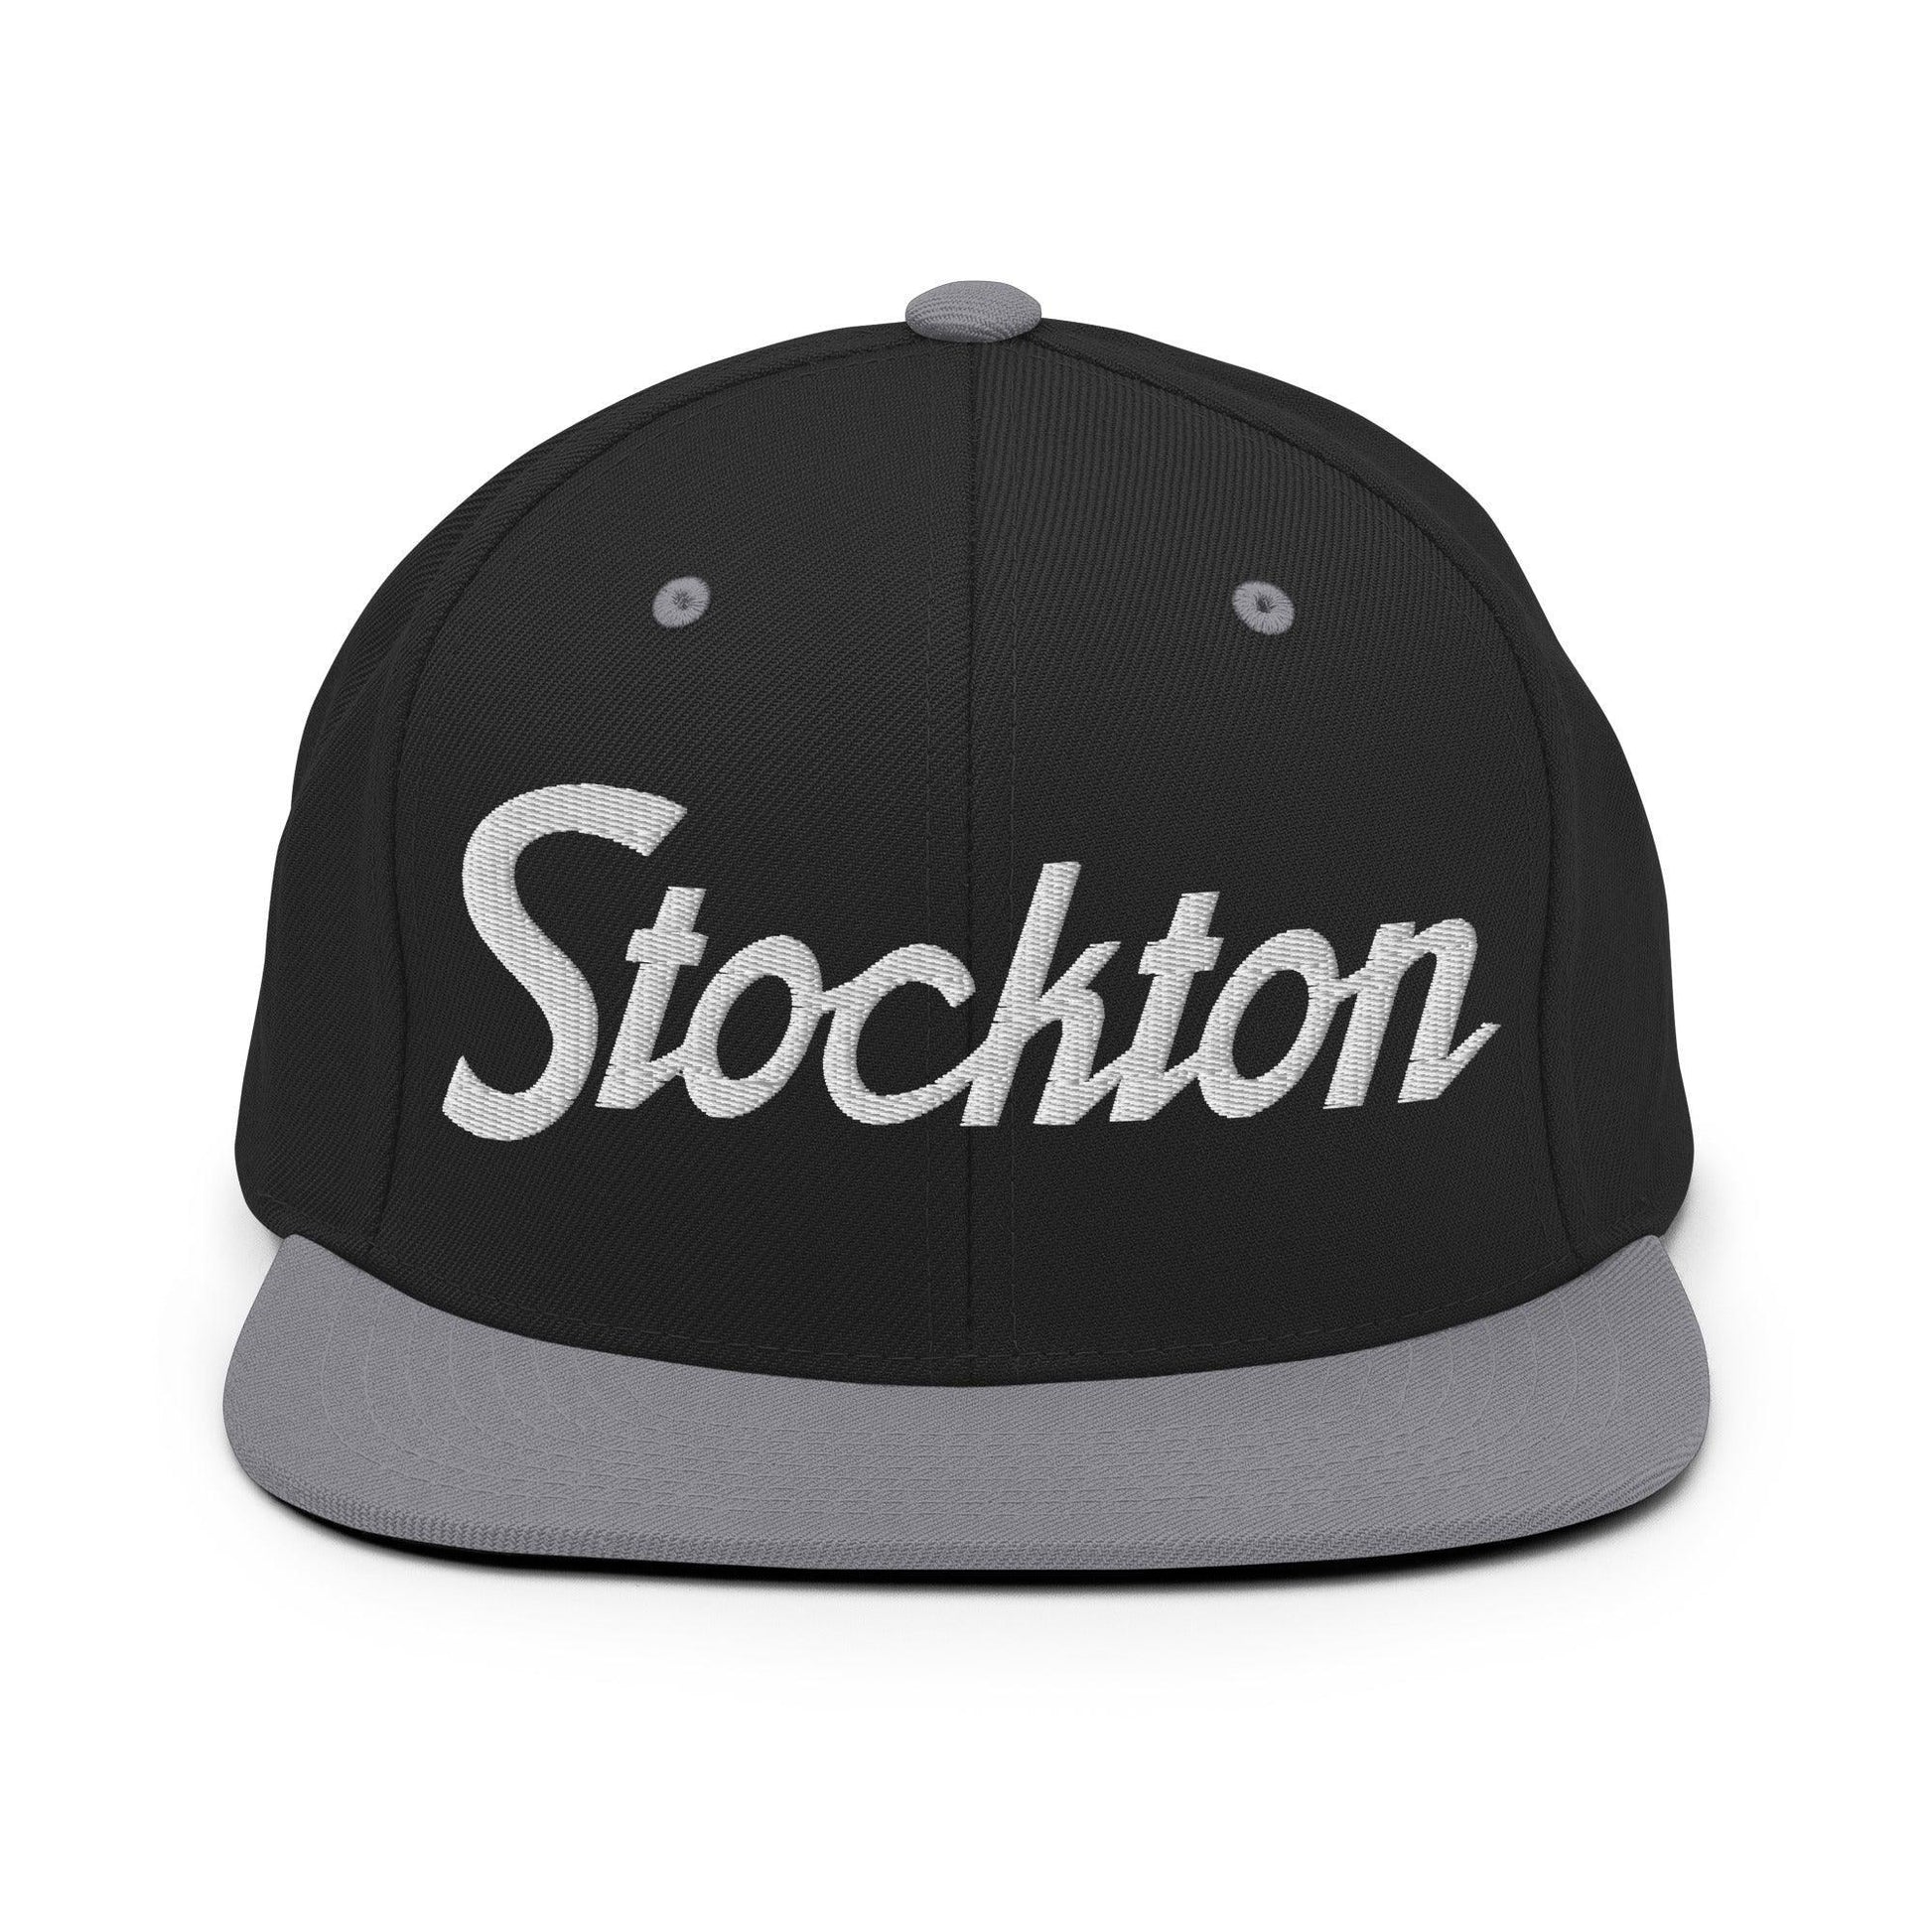 Stockton Script Snapback Hat Black/ Silver